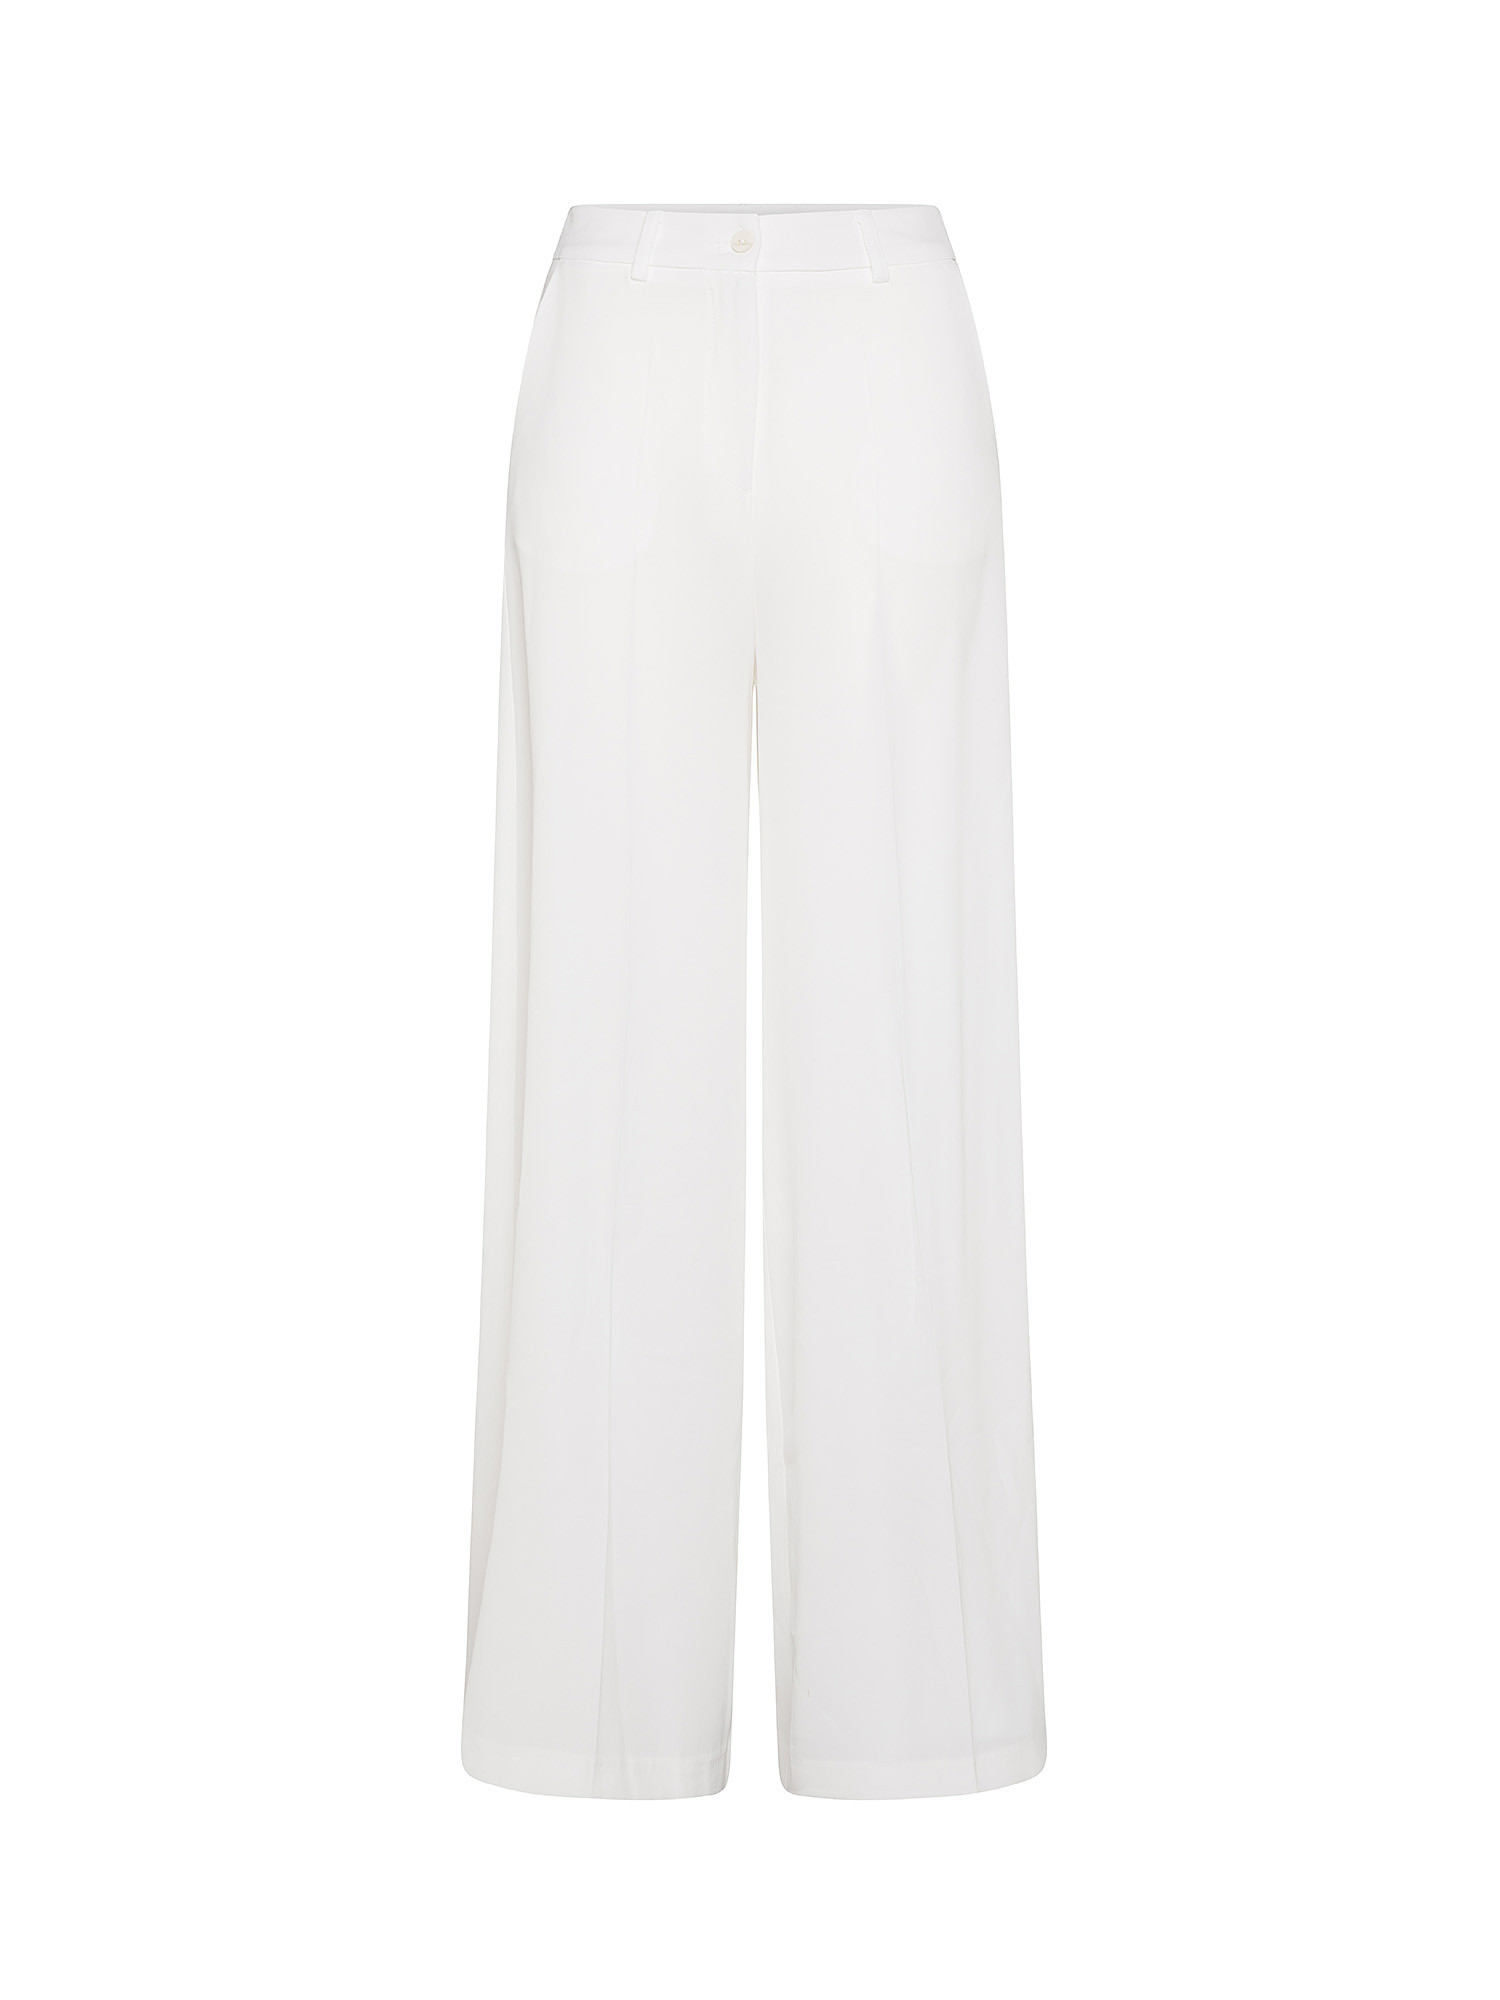 Pantalone in cady, Bianco, large image number 0